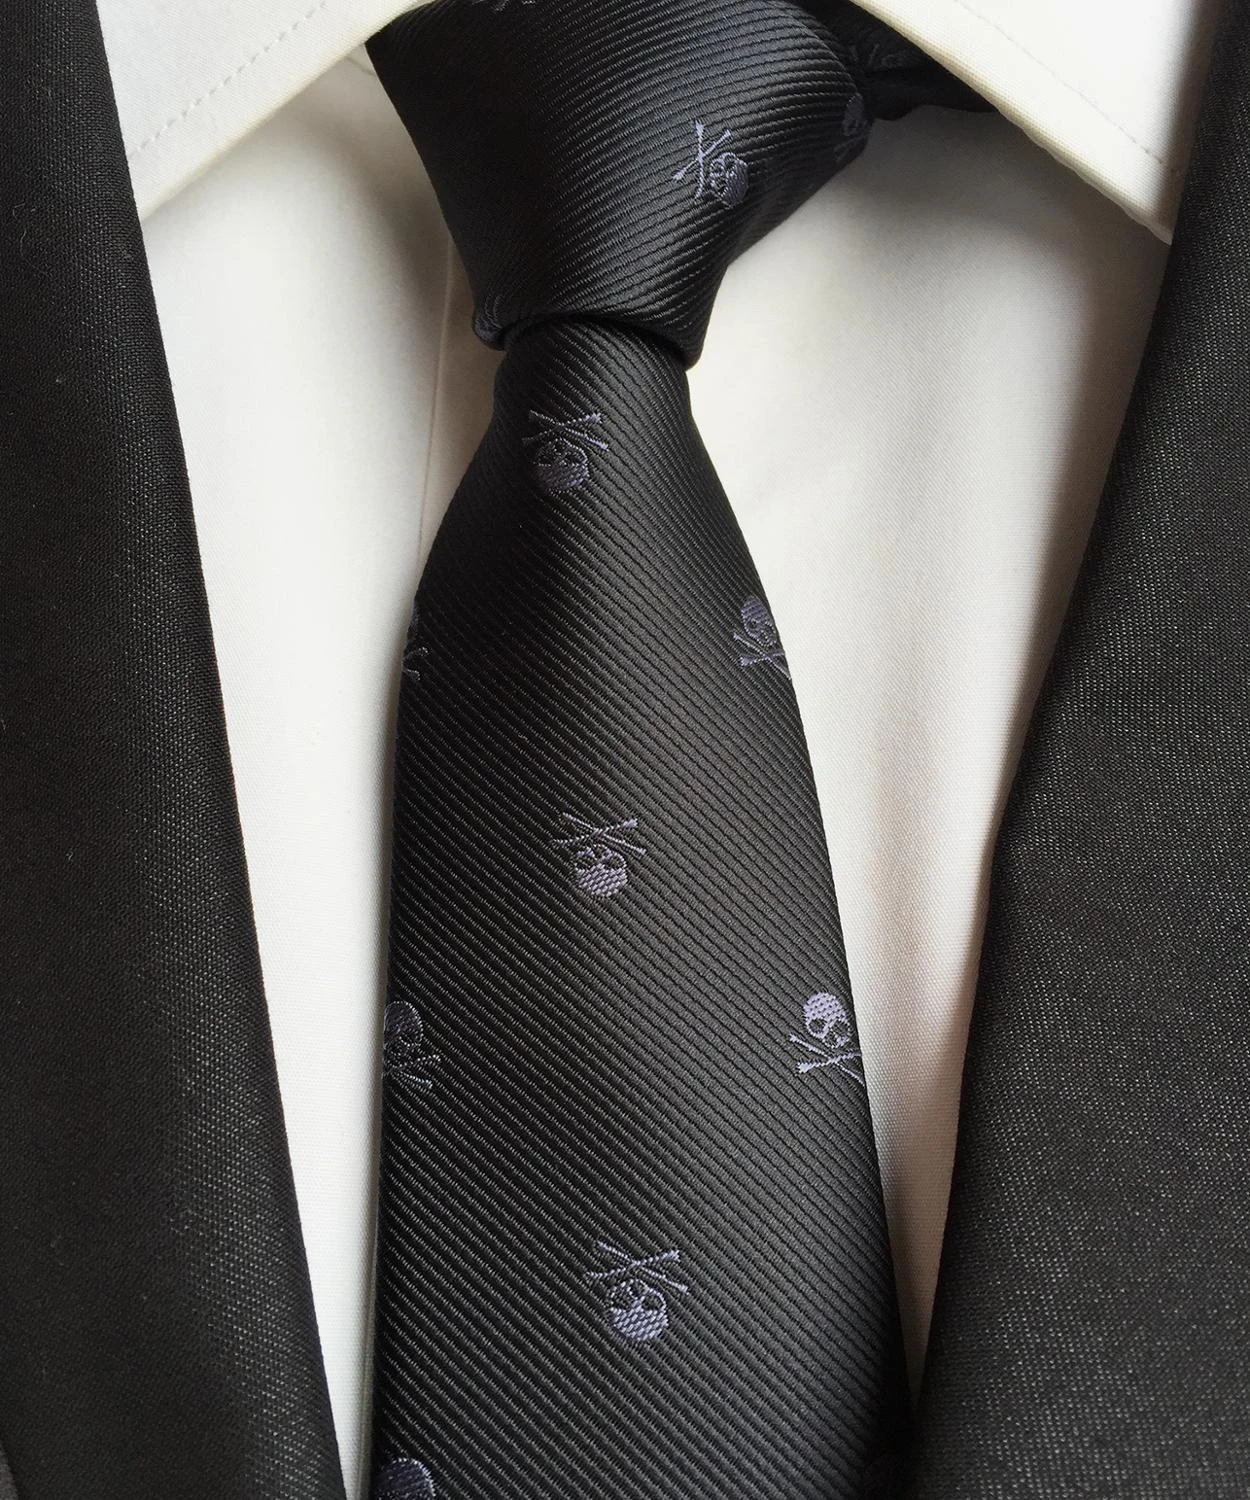 Men's Ties Black with Silver Skull Pattern Fashion Necktie